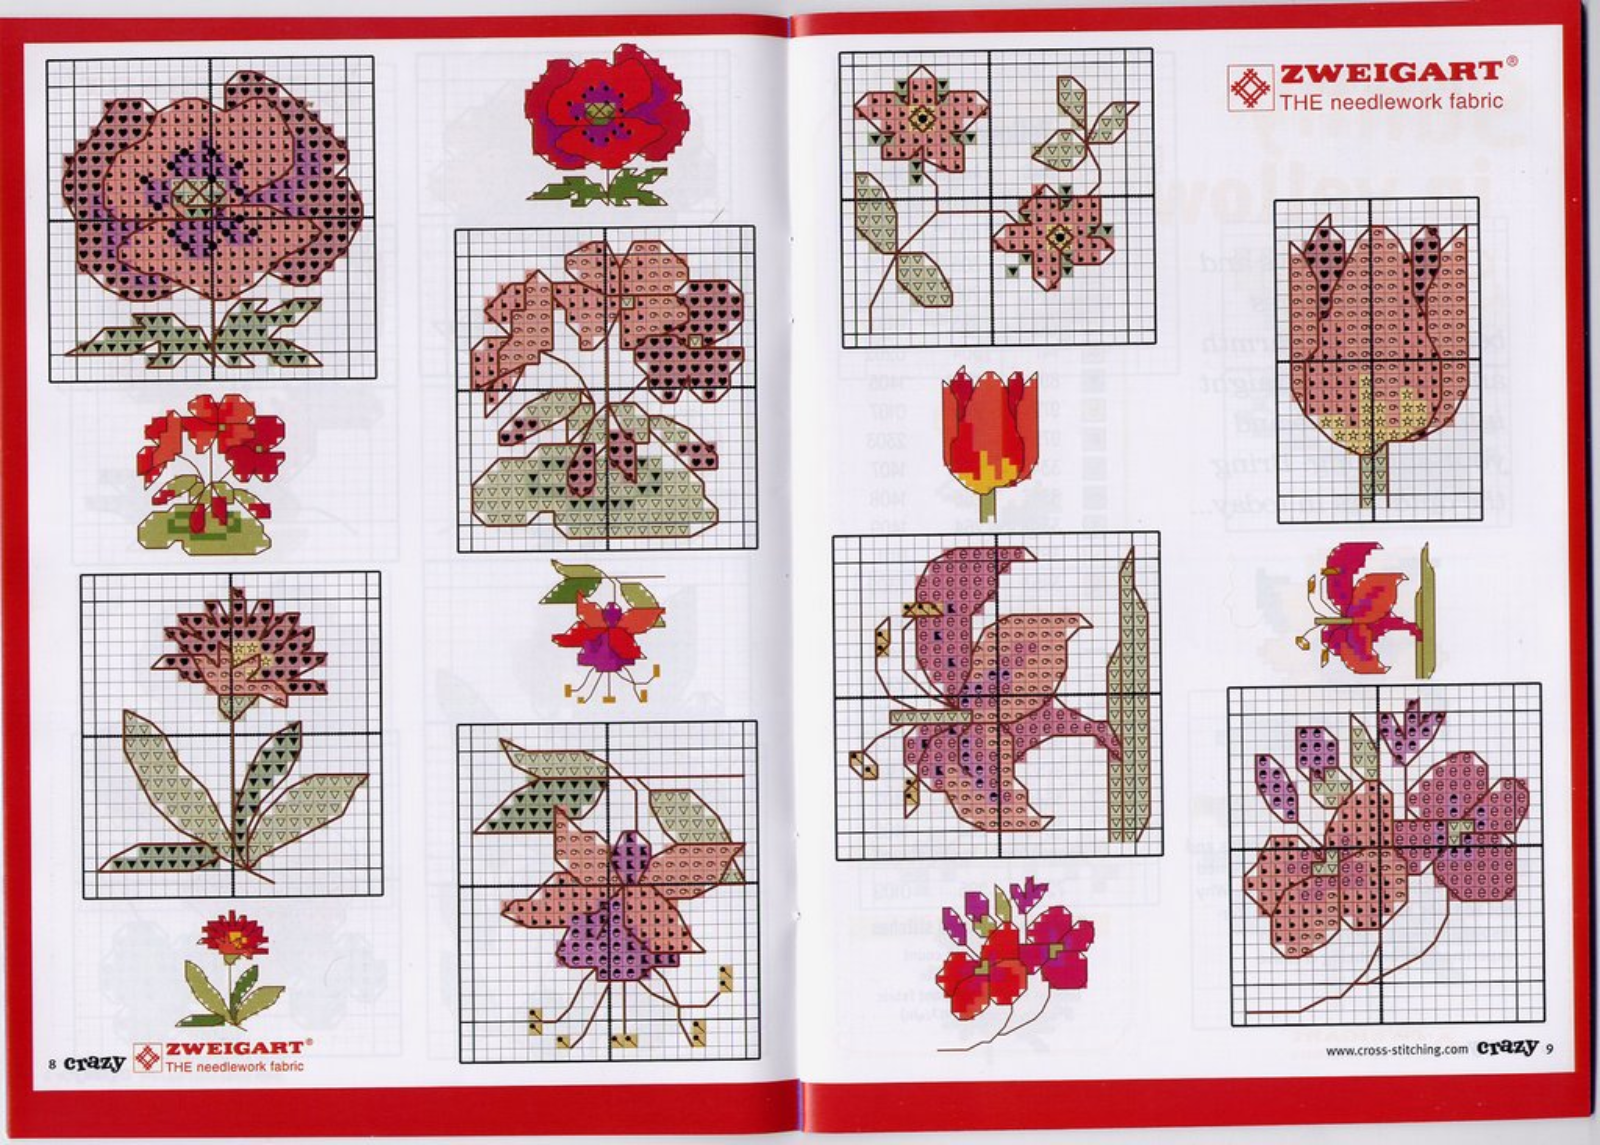 Fiori rossi romantici rose tulipani campanule schemi punto croce (3)